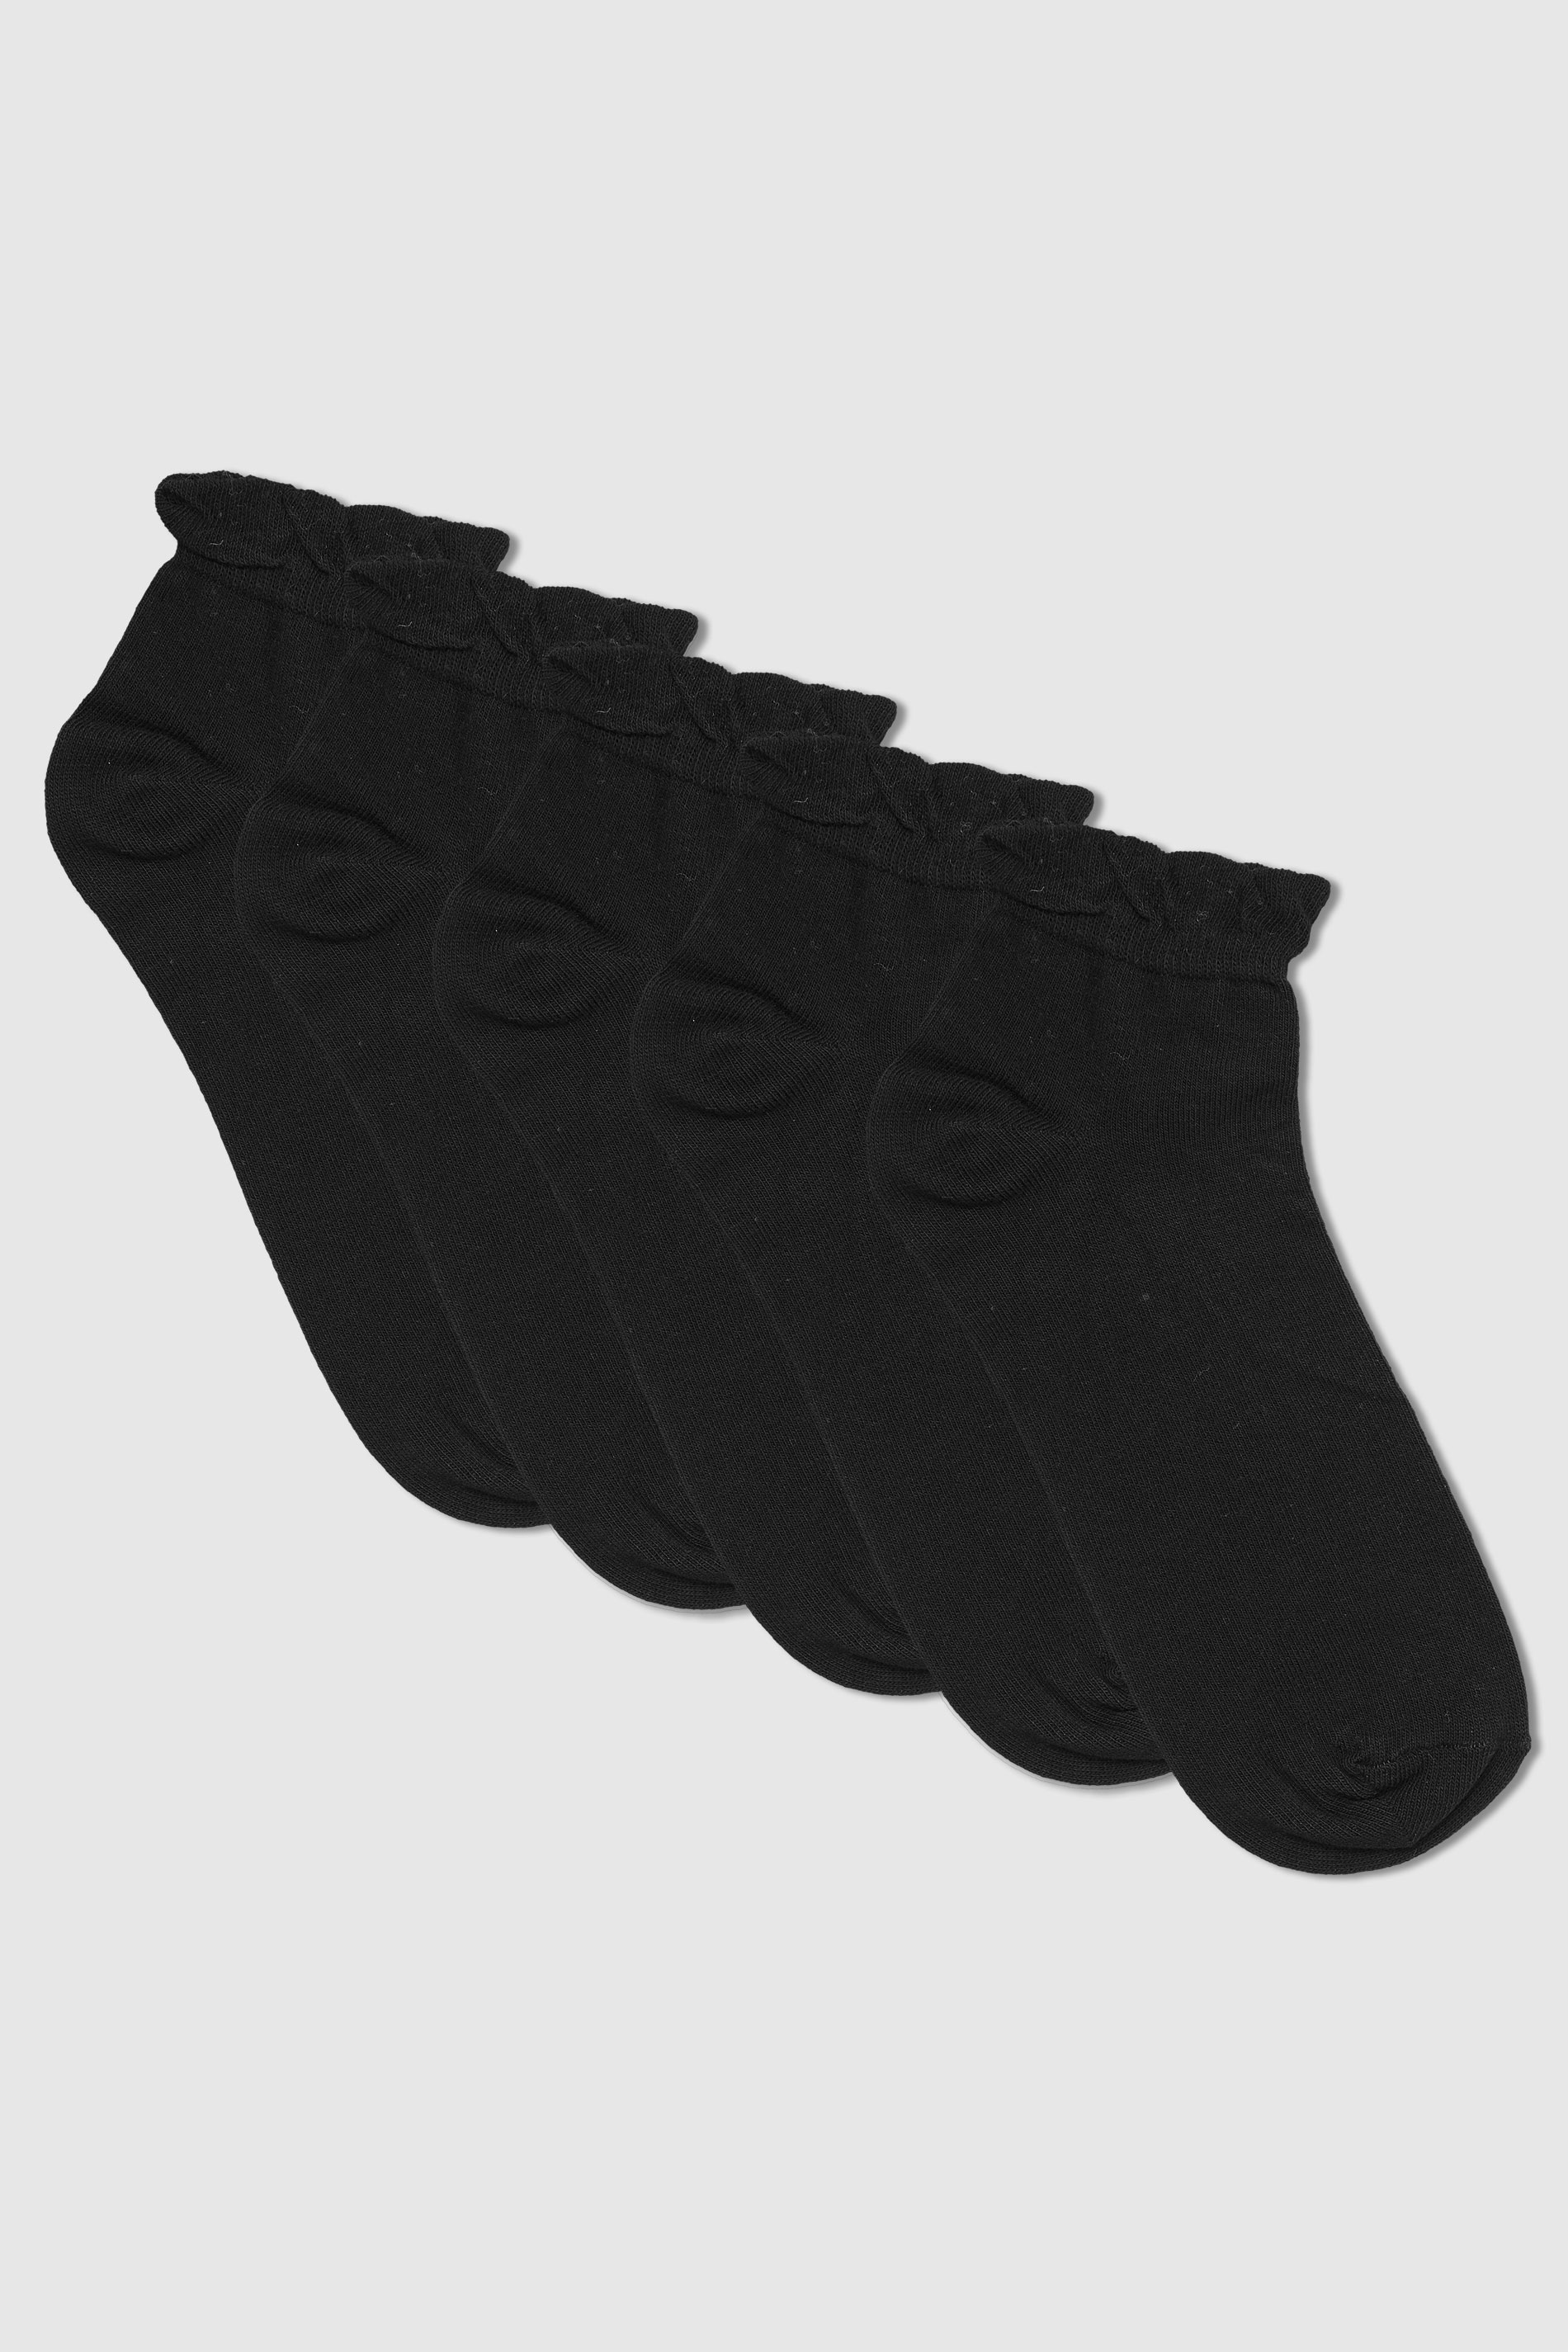 5 PACK Black Trainer Liner Socks_A.jpg